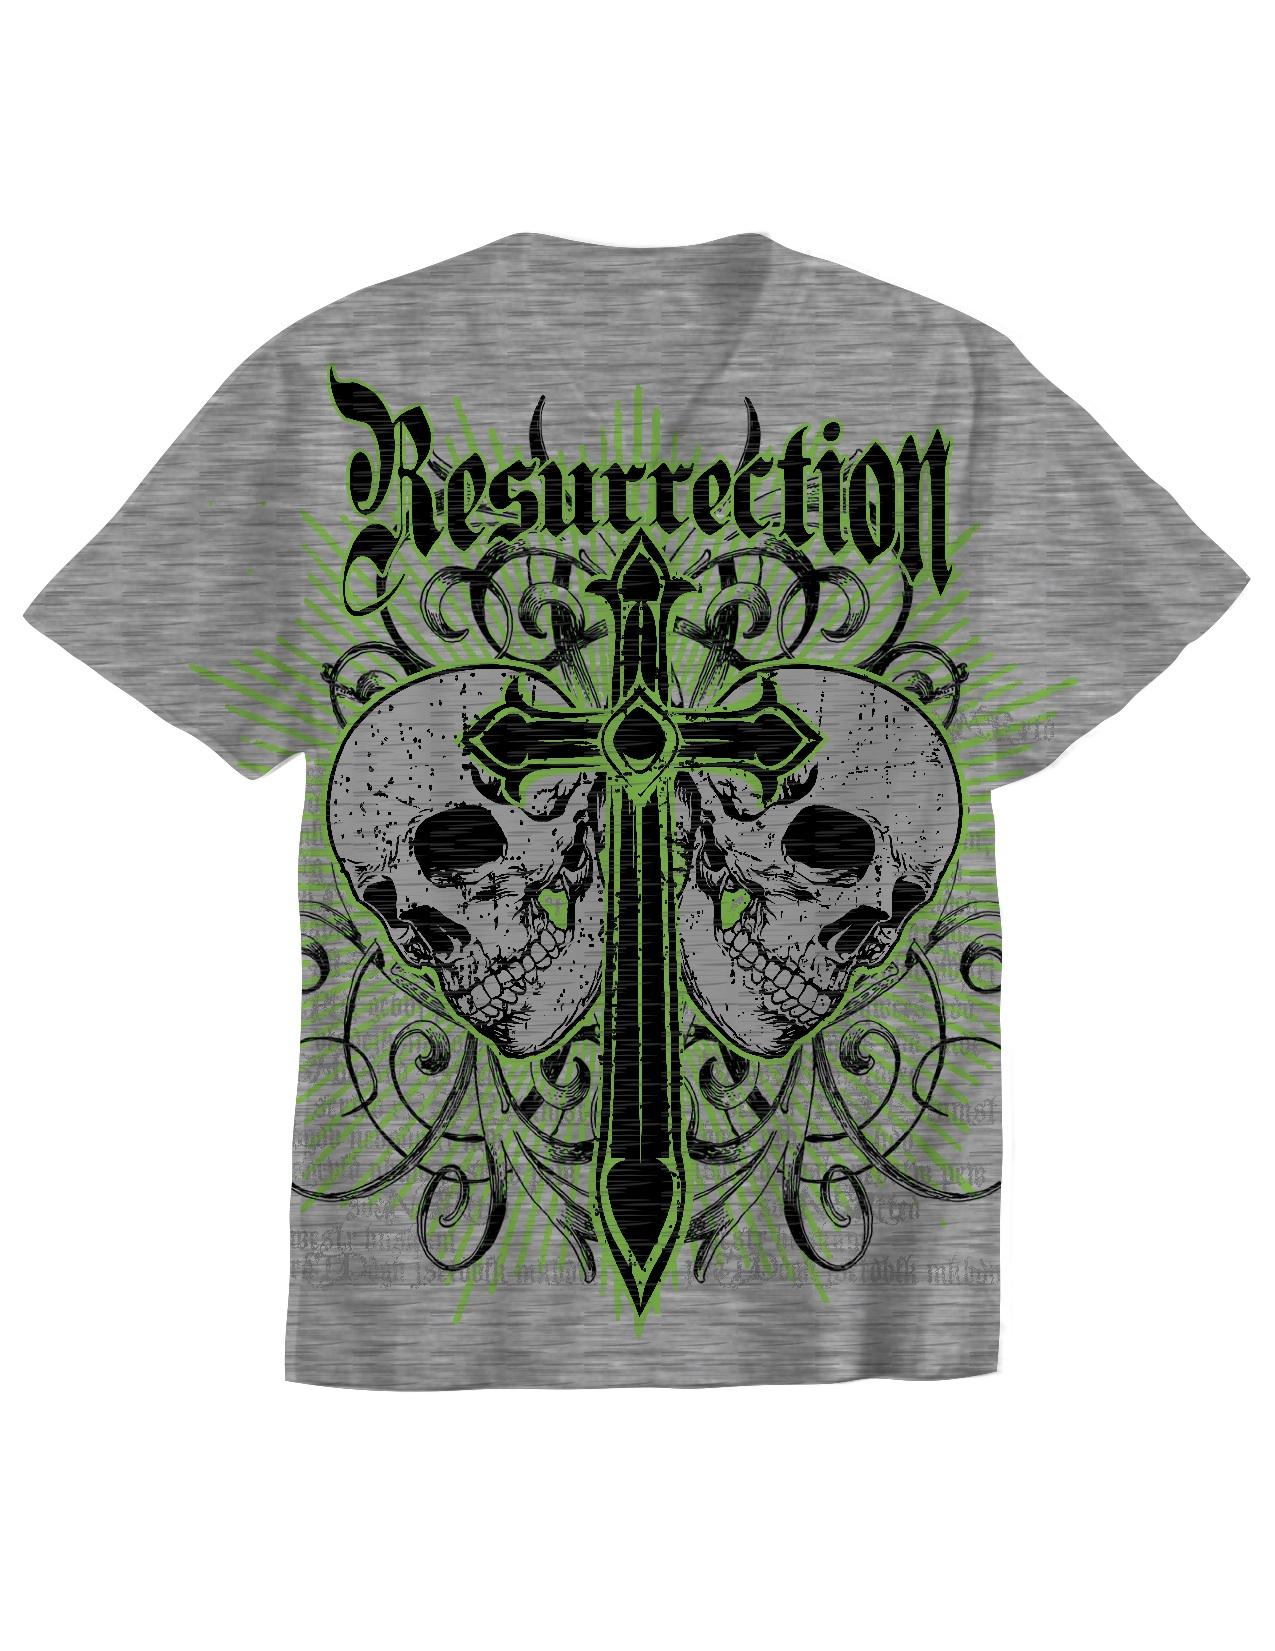 SK2 Boy's Graphic T-Shirt - Resurrection & Skulls